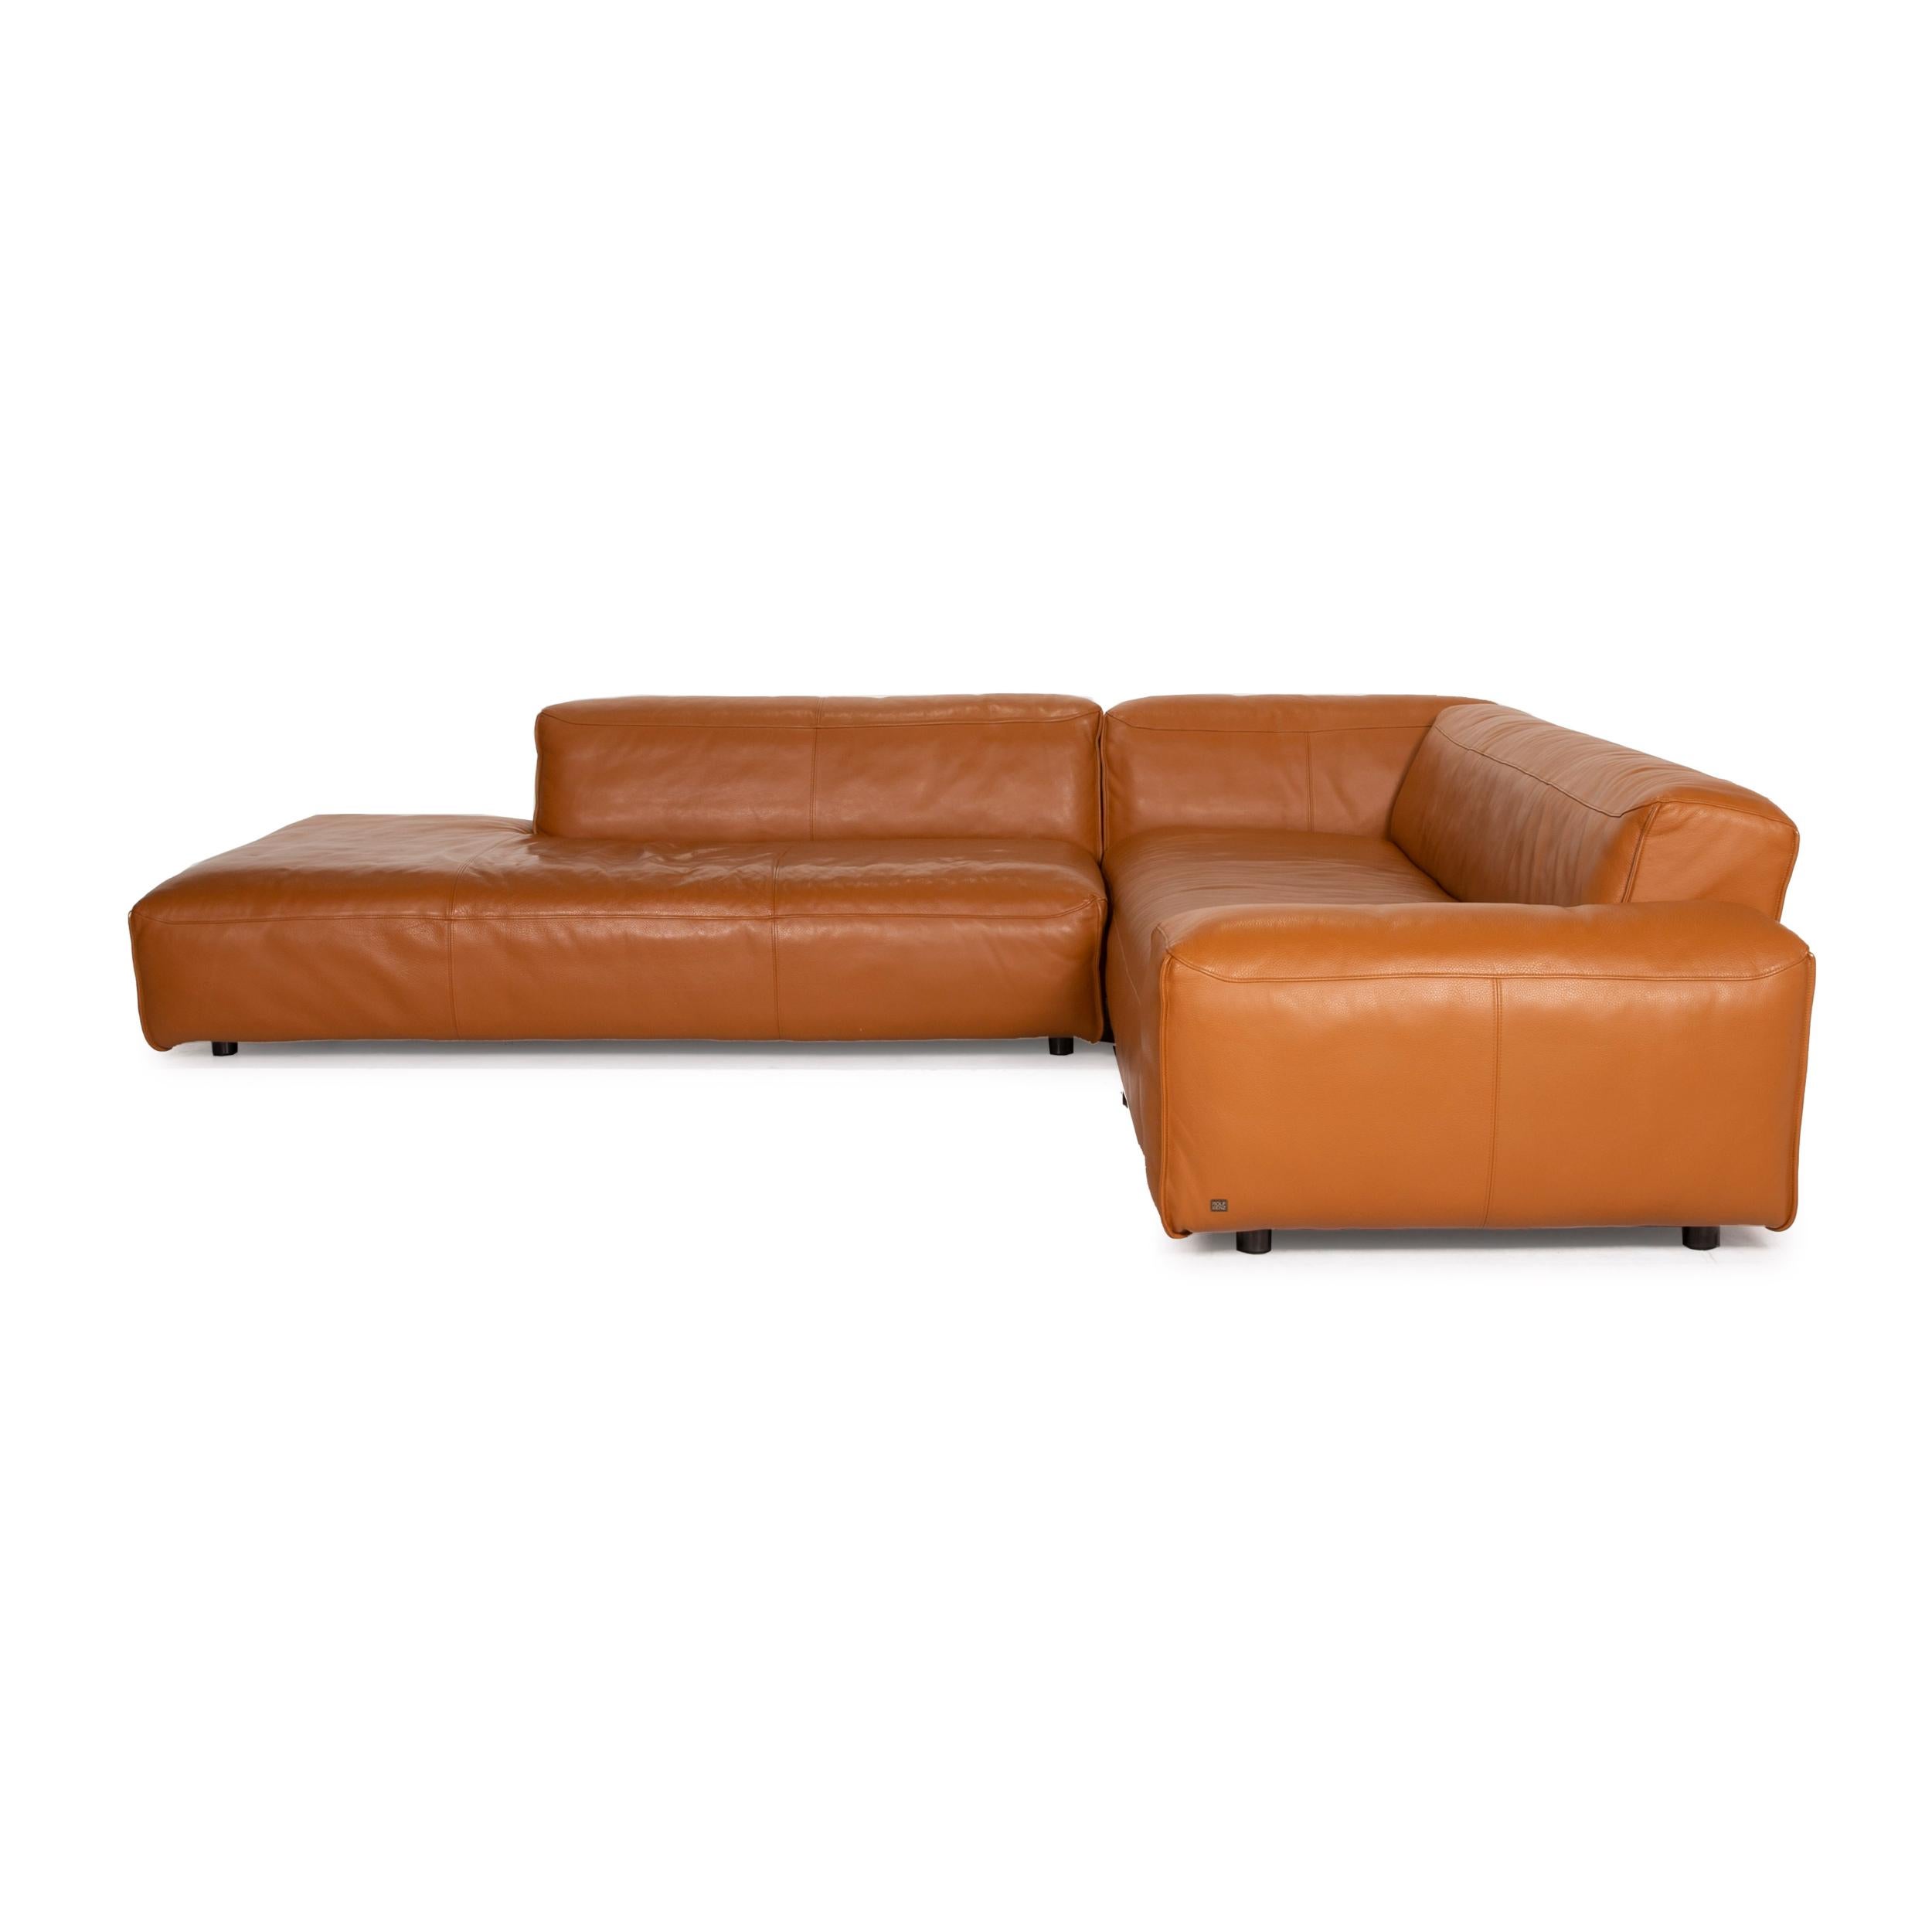 Rolf Benz Mio leather sofa cognac corner sofa For Sale 4